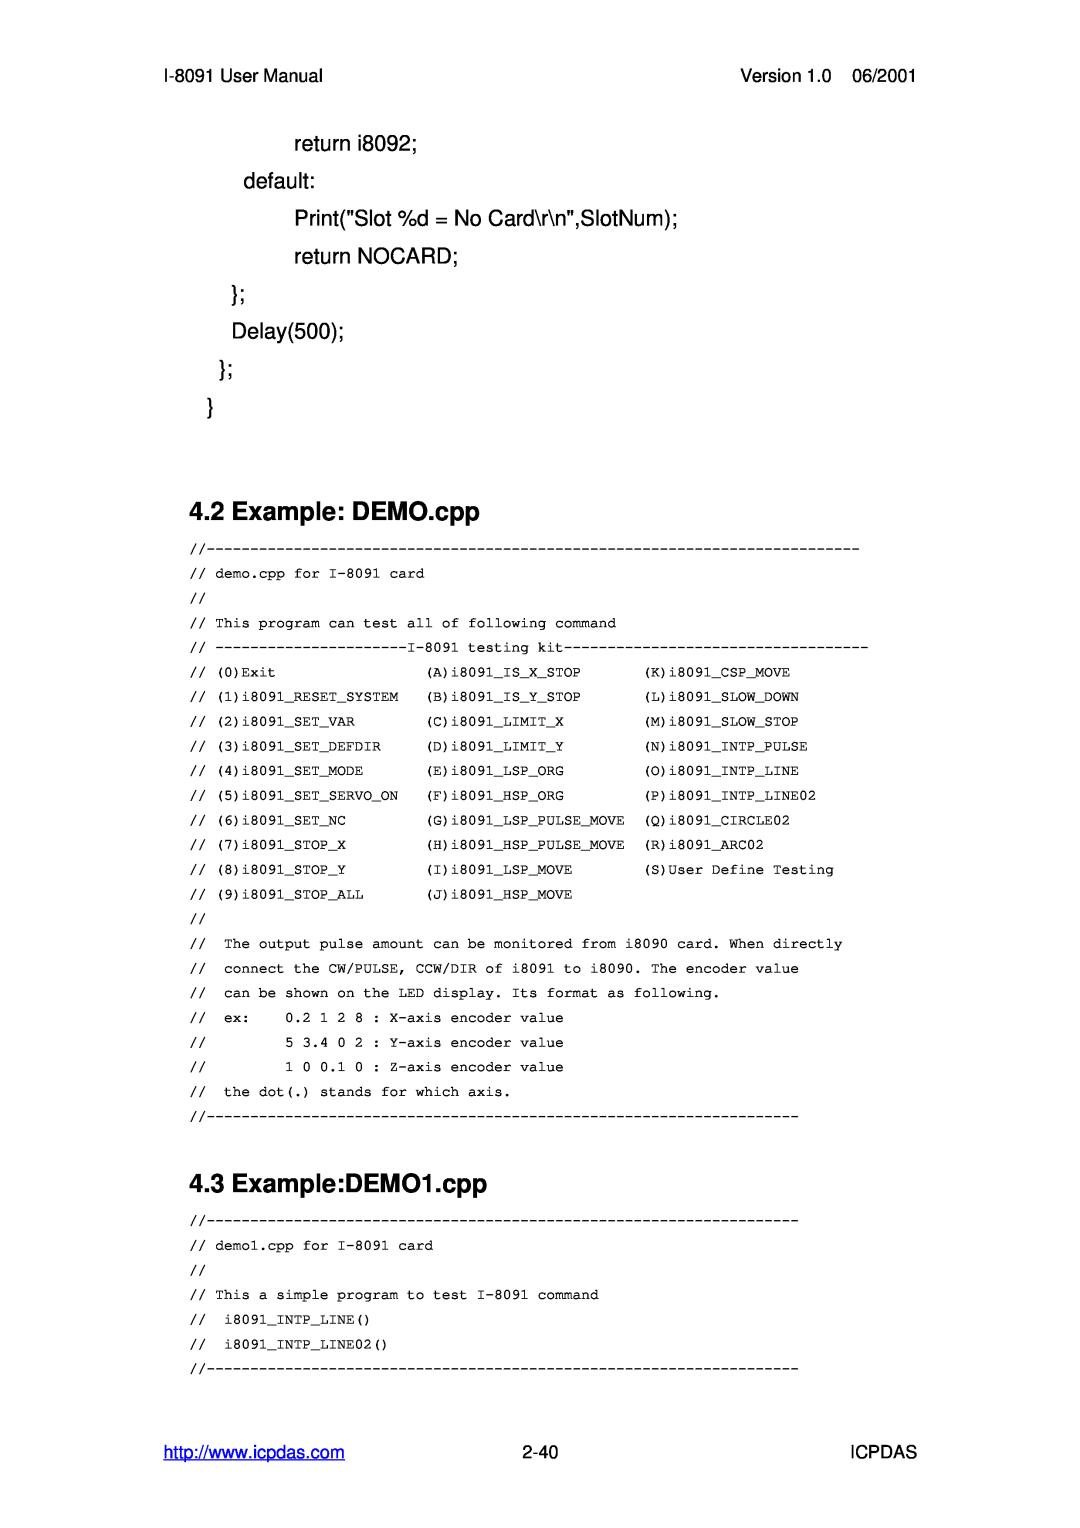 ICP DAS USA I-8091 2-axis stepping/servo user manual Example DEMO.cpp, ExampleDEMO1.cpp, Version 1.0 06/2001, 2-40, Icpdas 